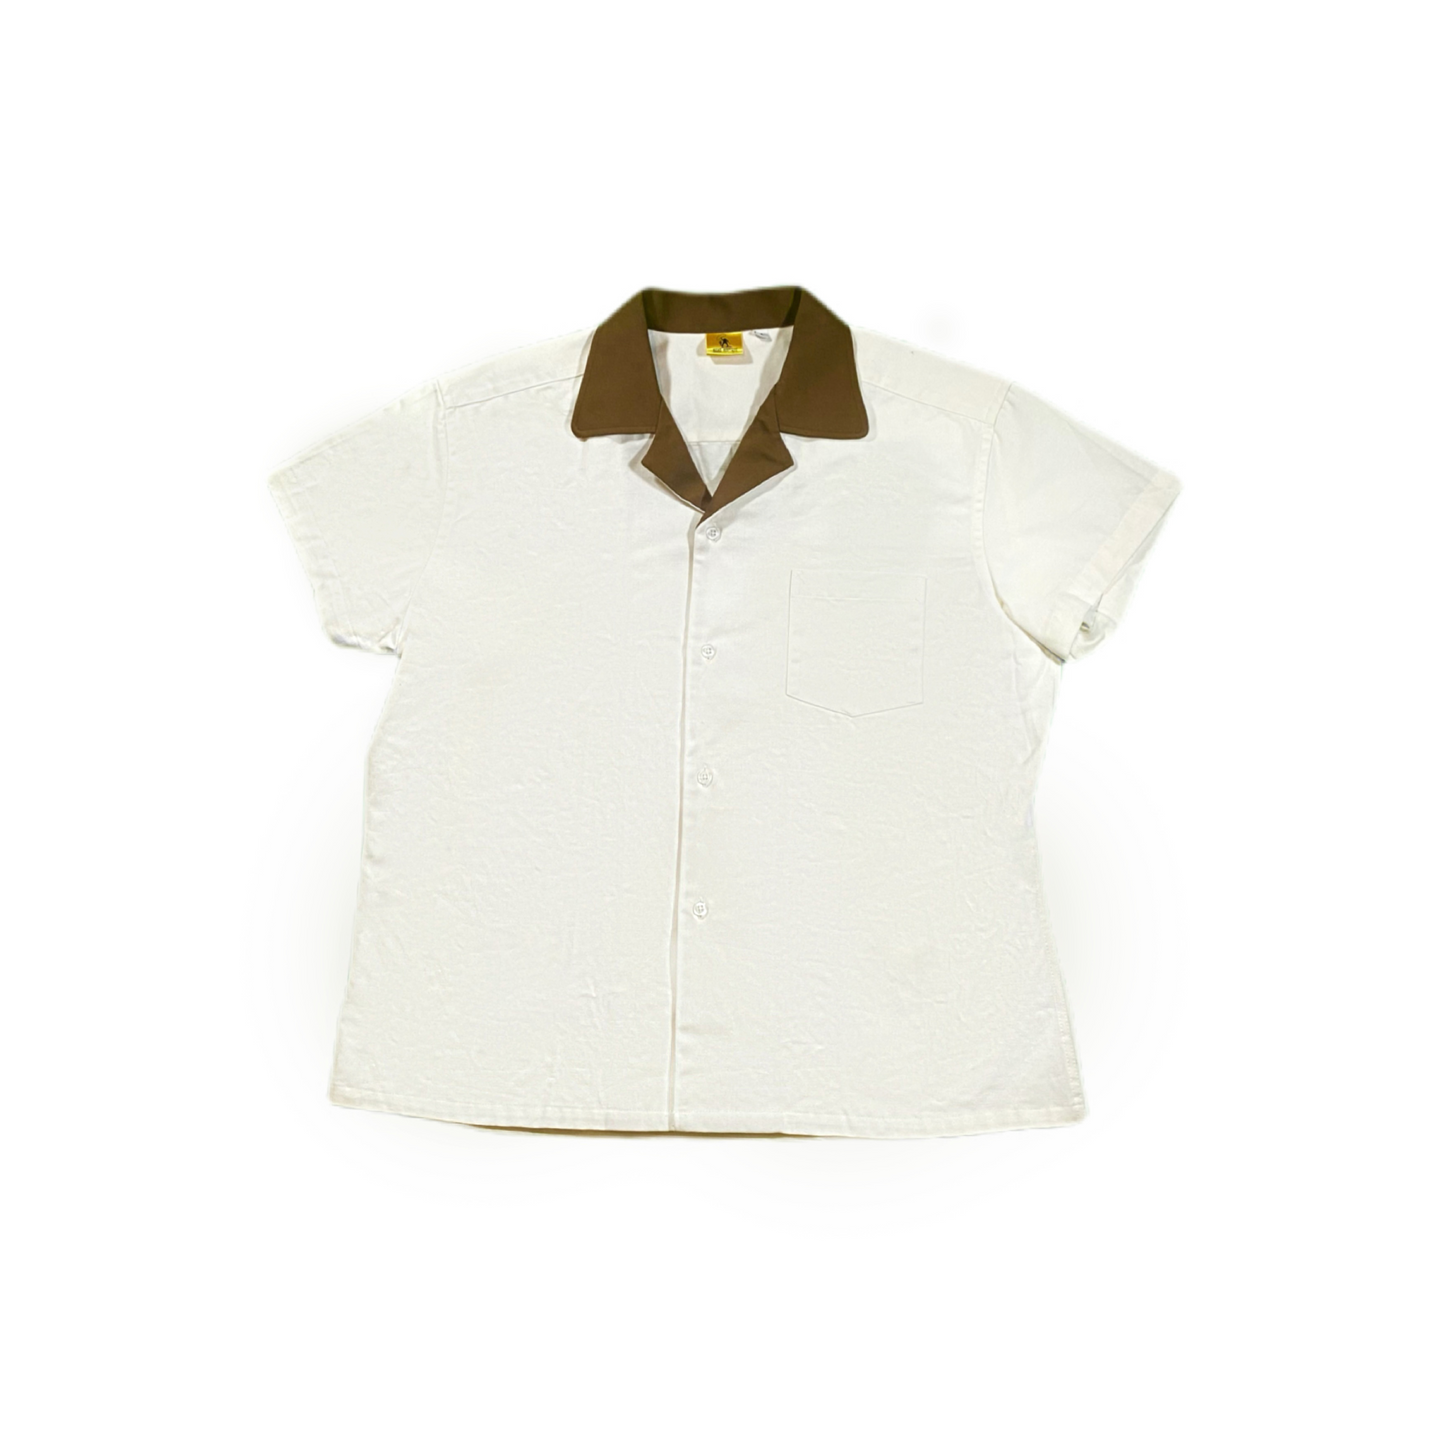 White / Brown Camp shirt